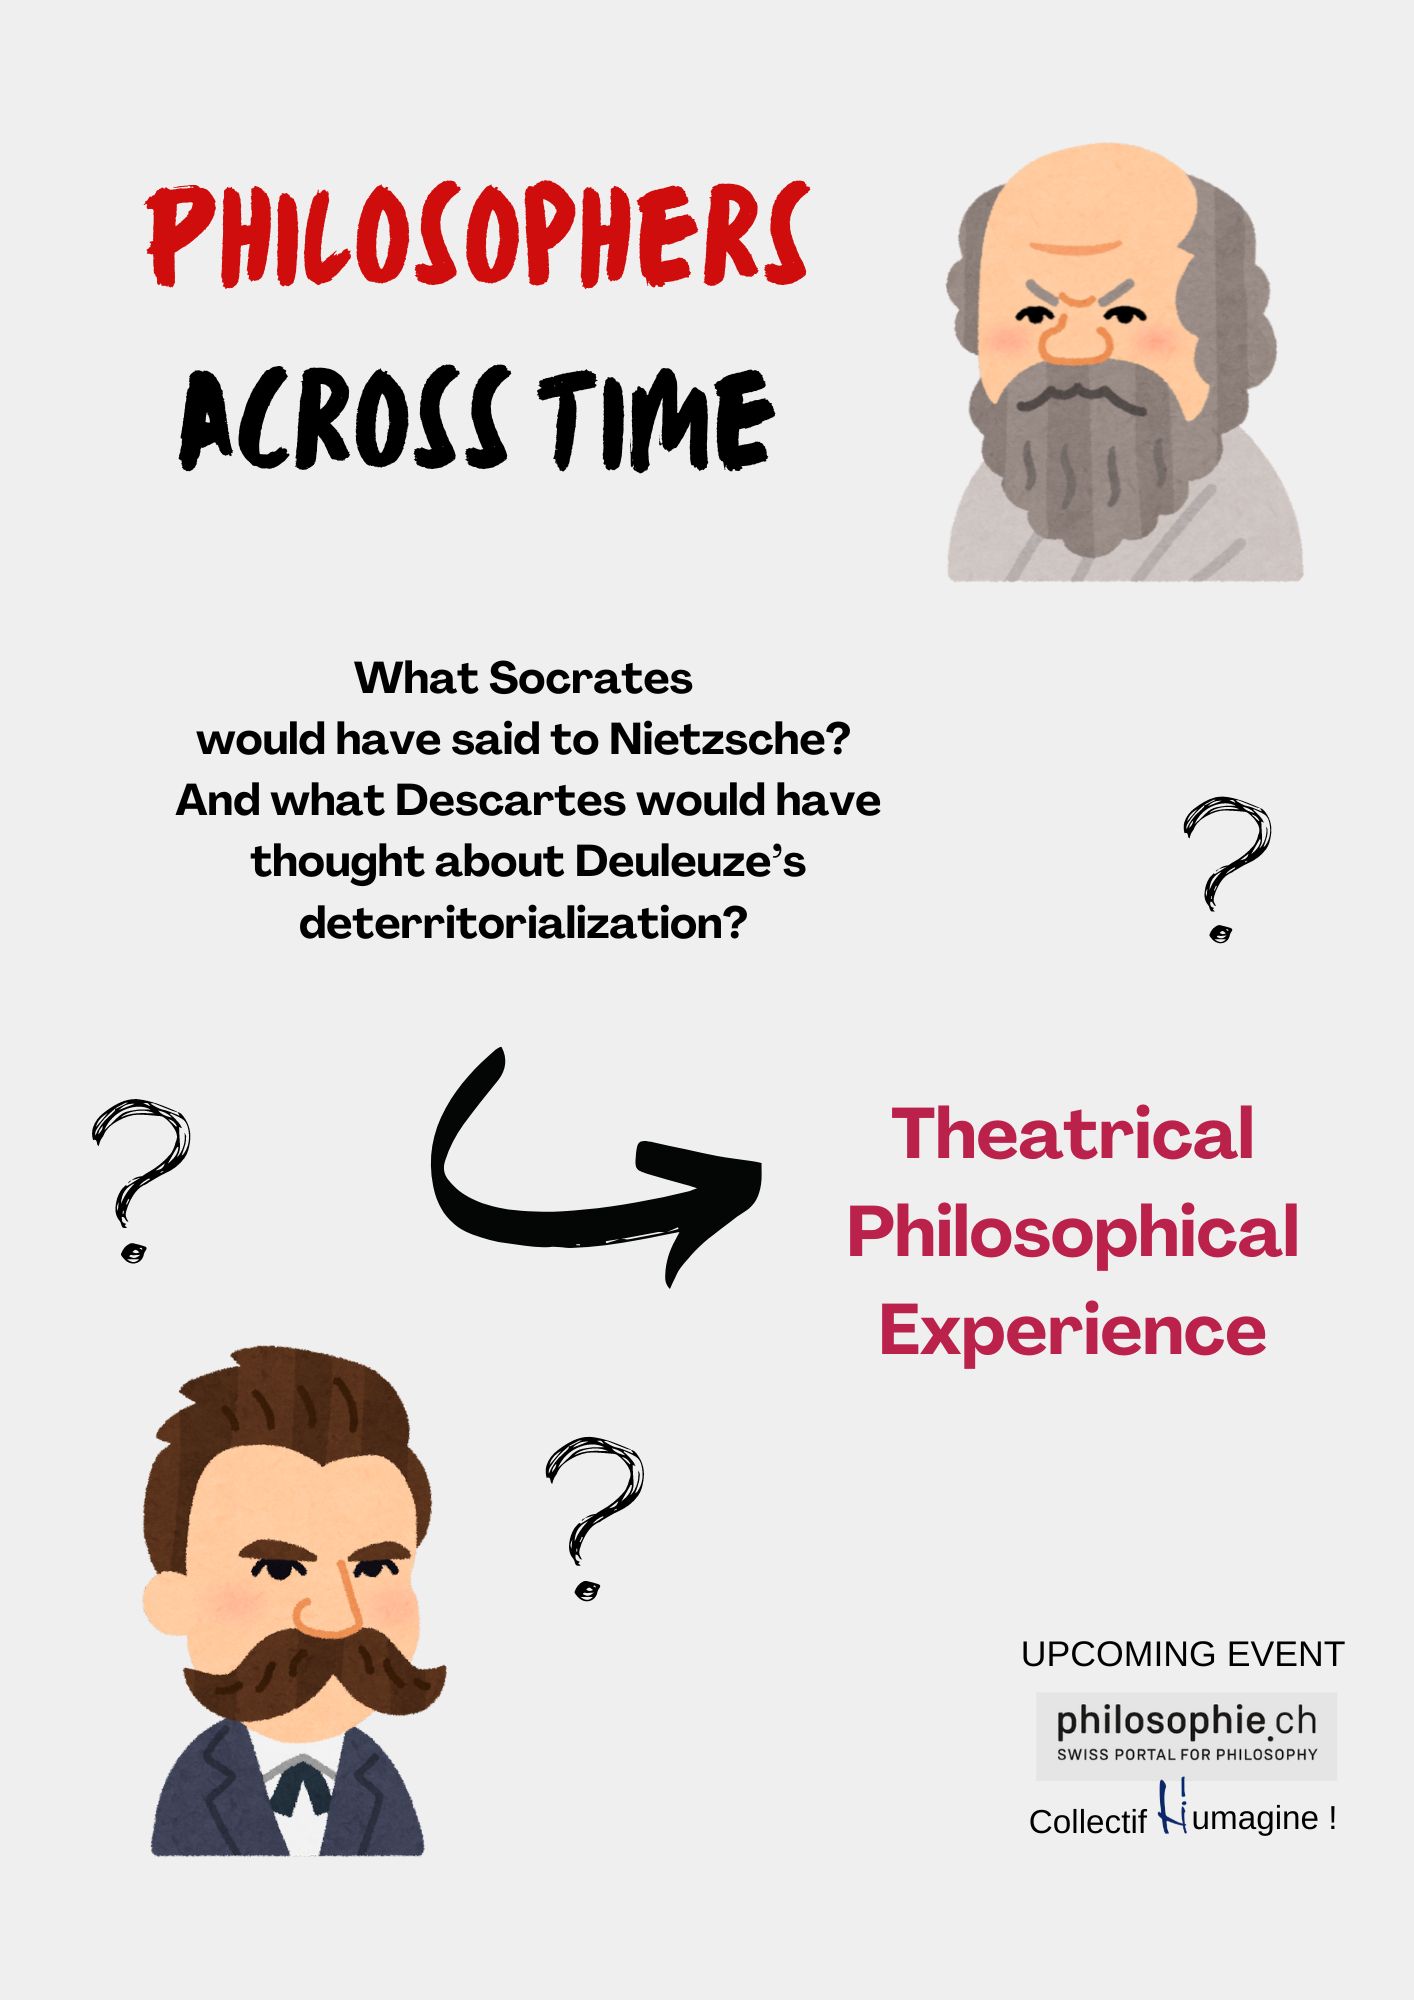 Philosophers across time